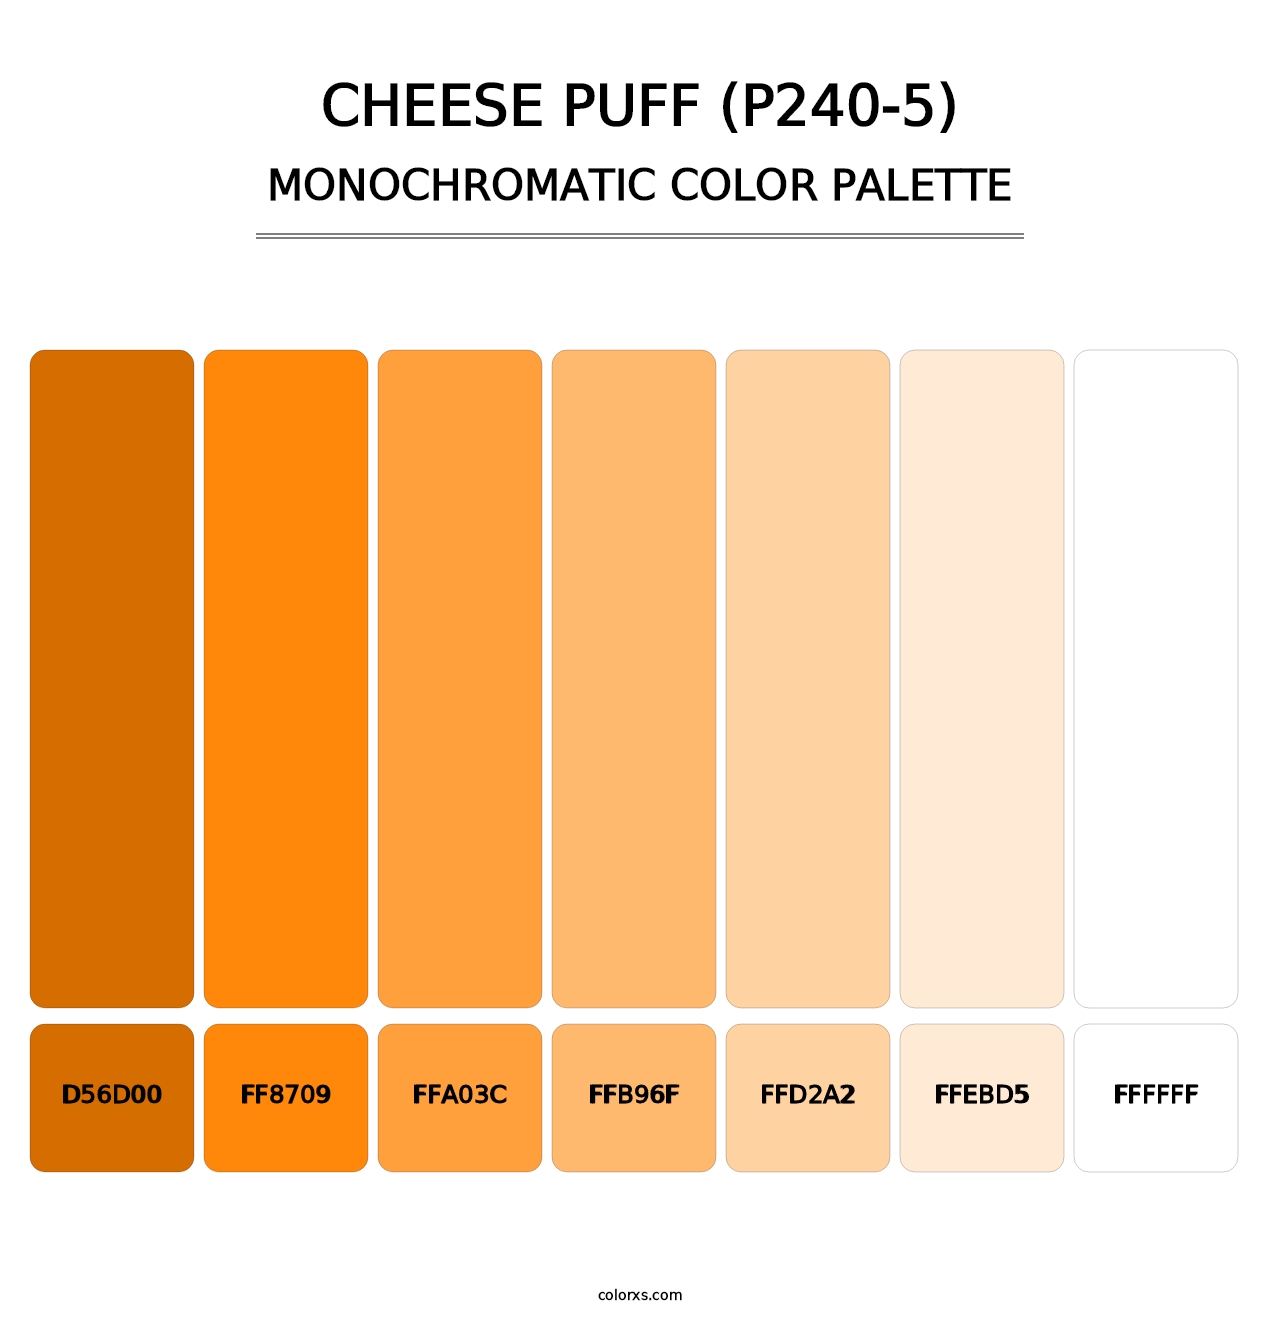 Cheese Puff (P240-5) - Monochromatic Color Palette